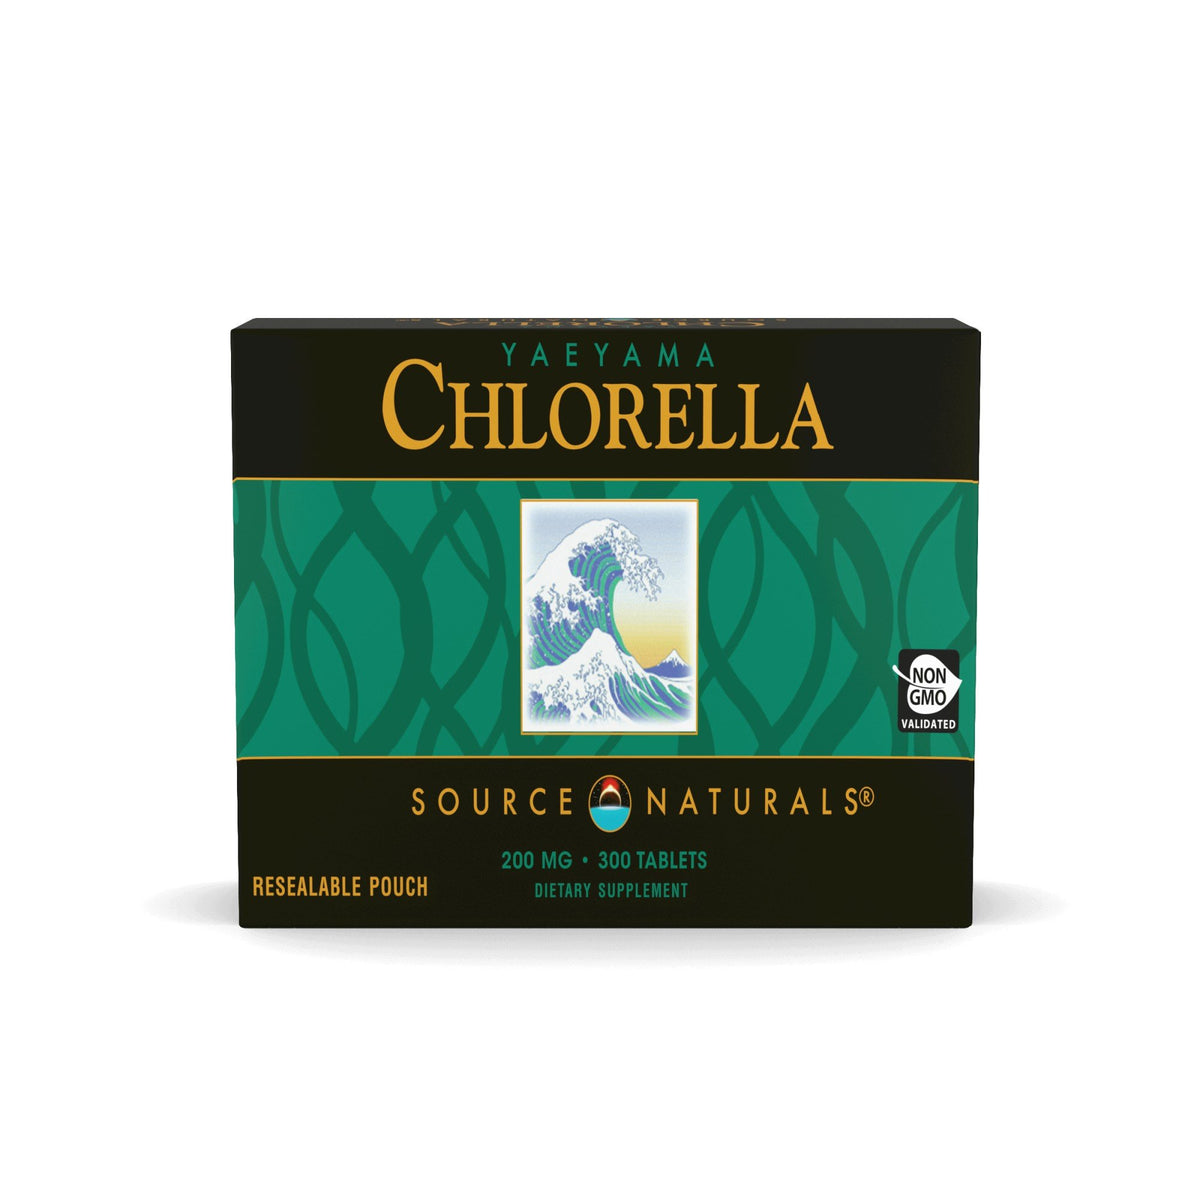 Source Naturals, Inc. Yaeyama Chlorella 300 Tablet